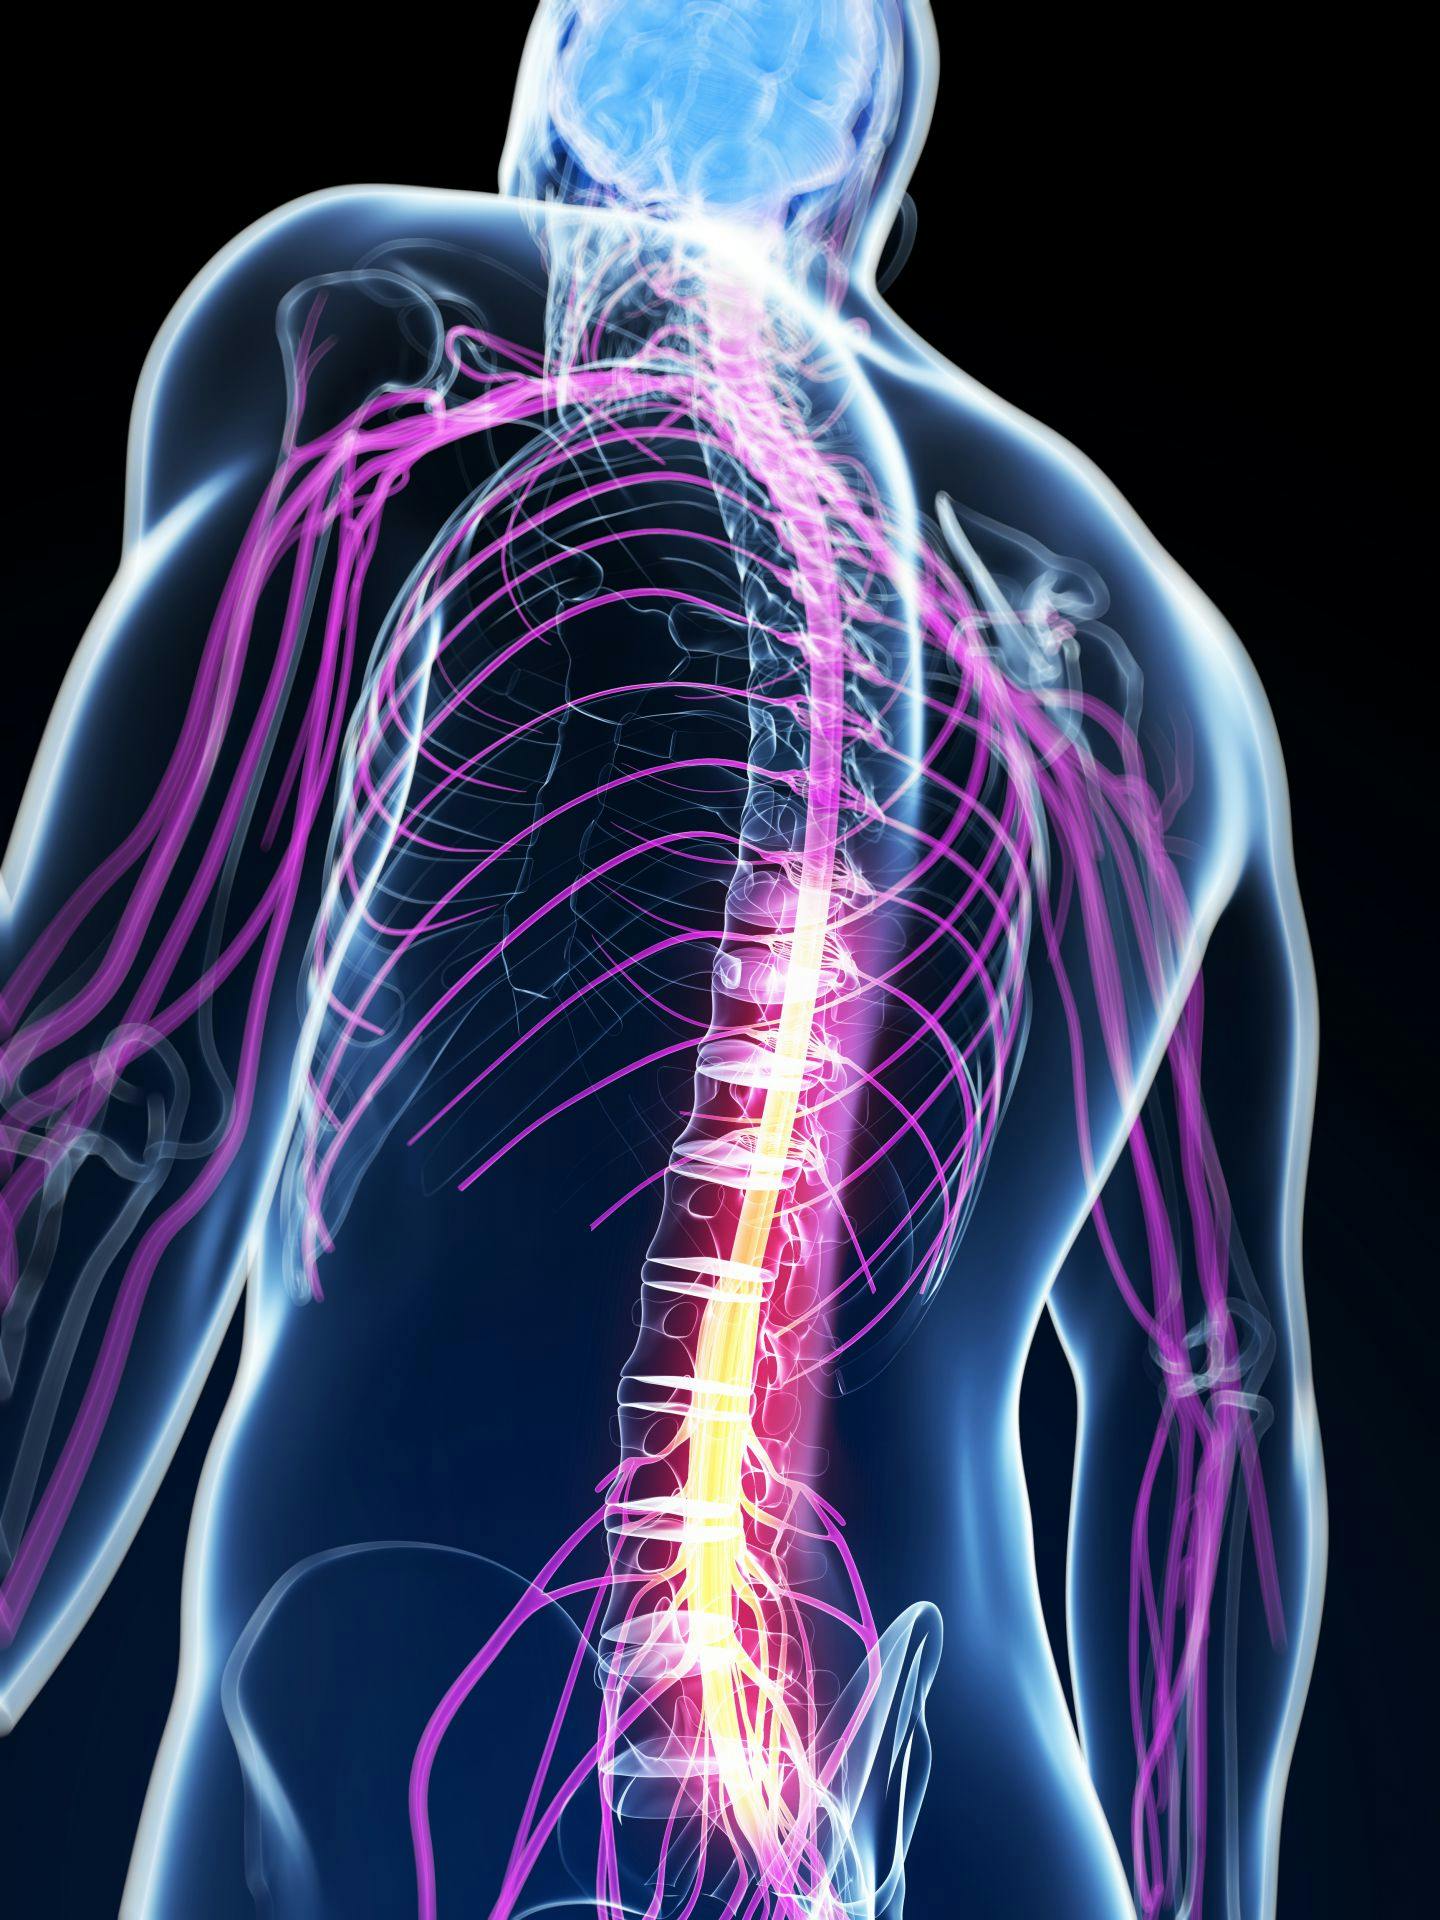 Skeletal view of low back pain